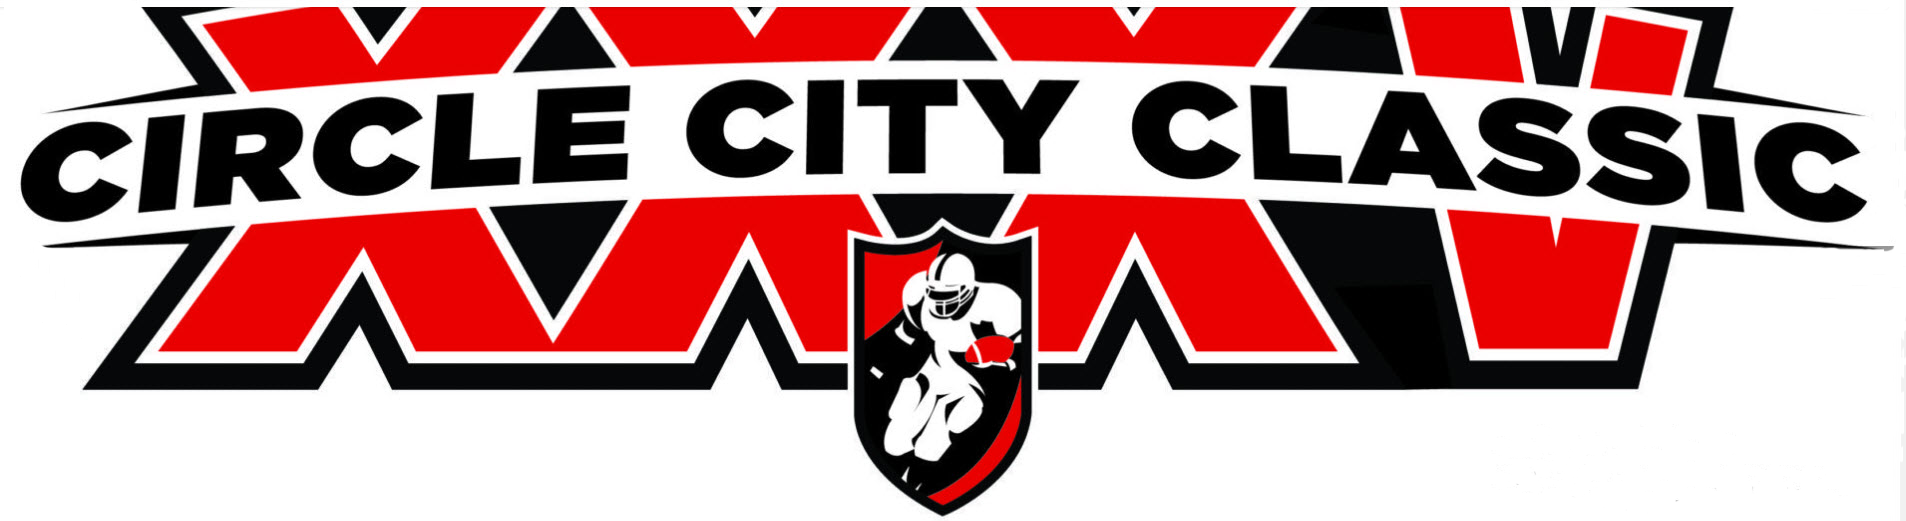 Circle City Classic Black College Sports History & Legends